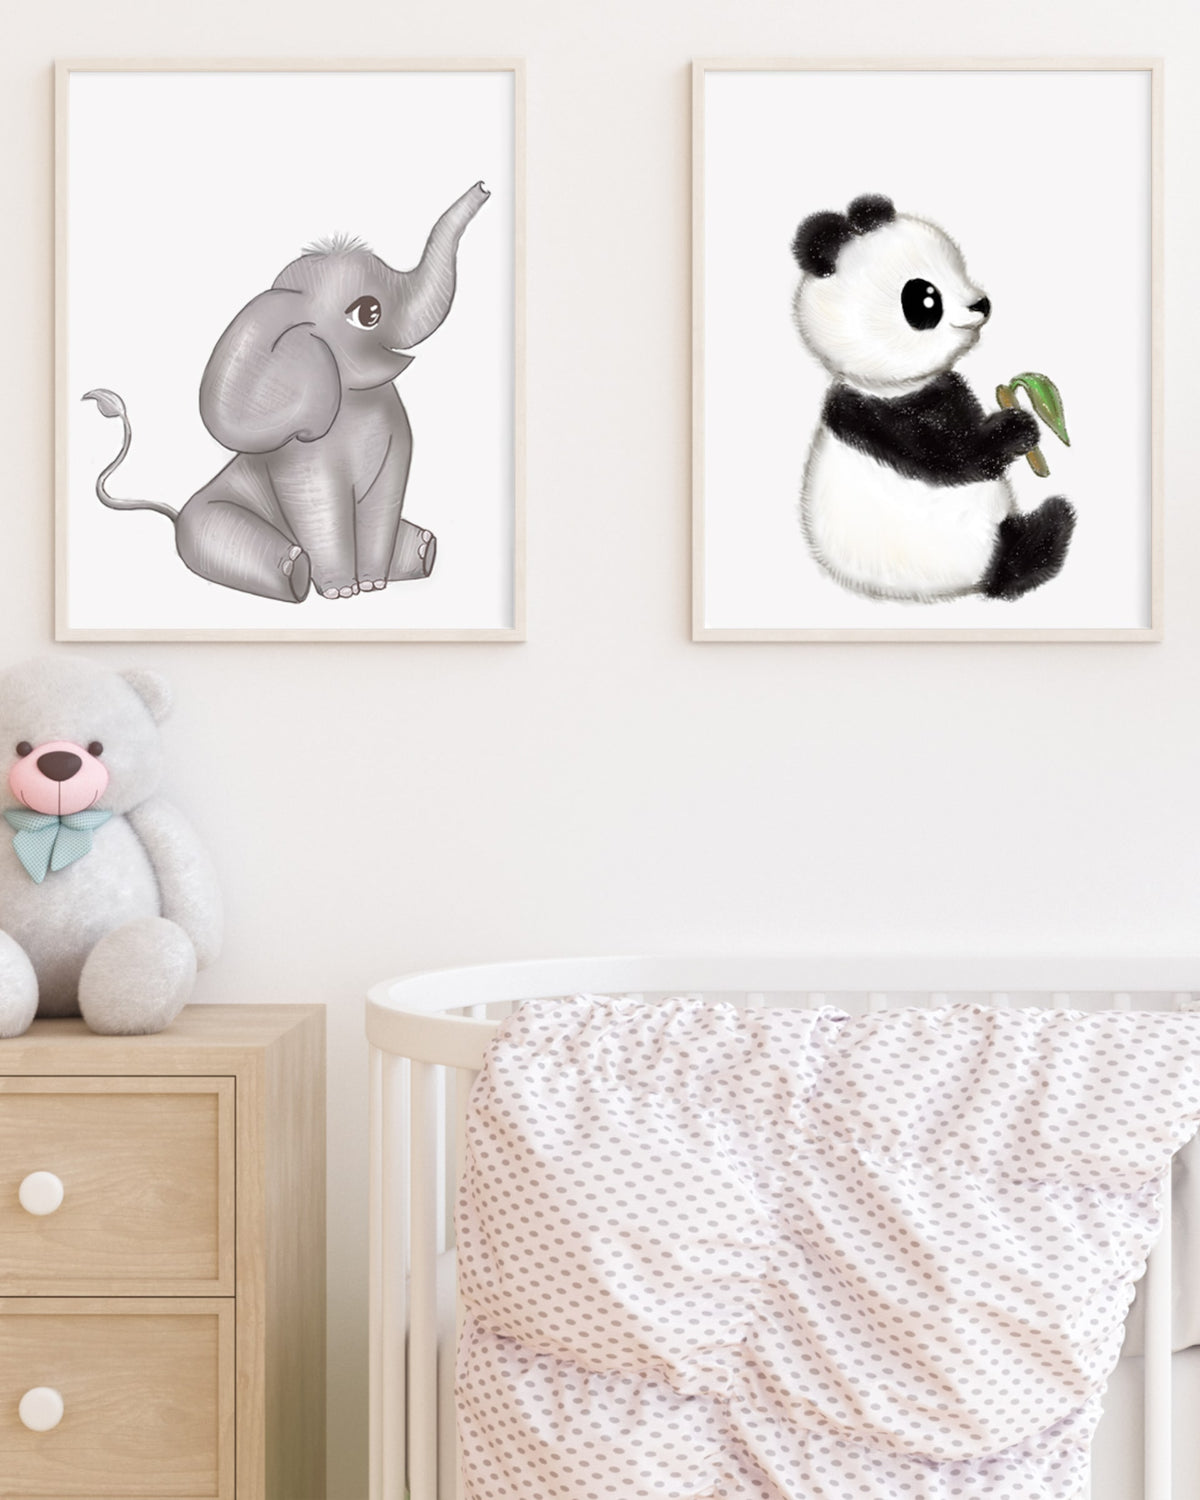 Framed example hand drawn nursery decor wall art poster cute safari baby animals